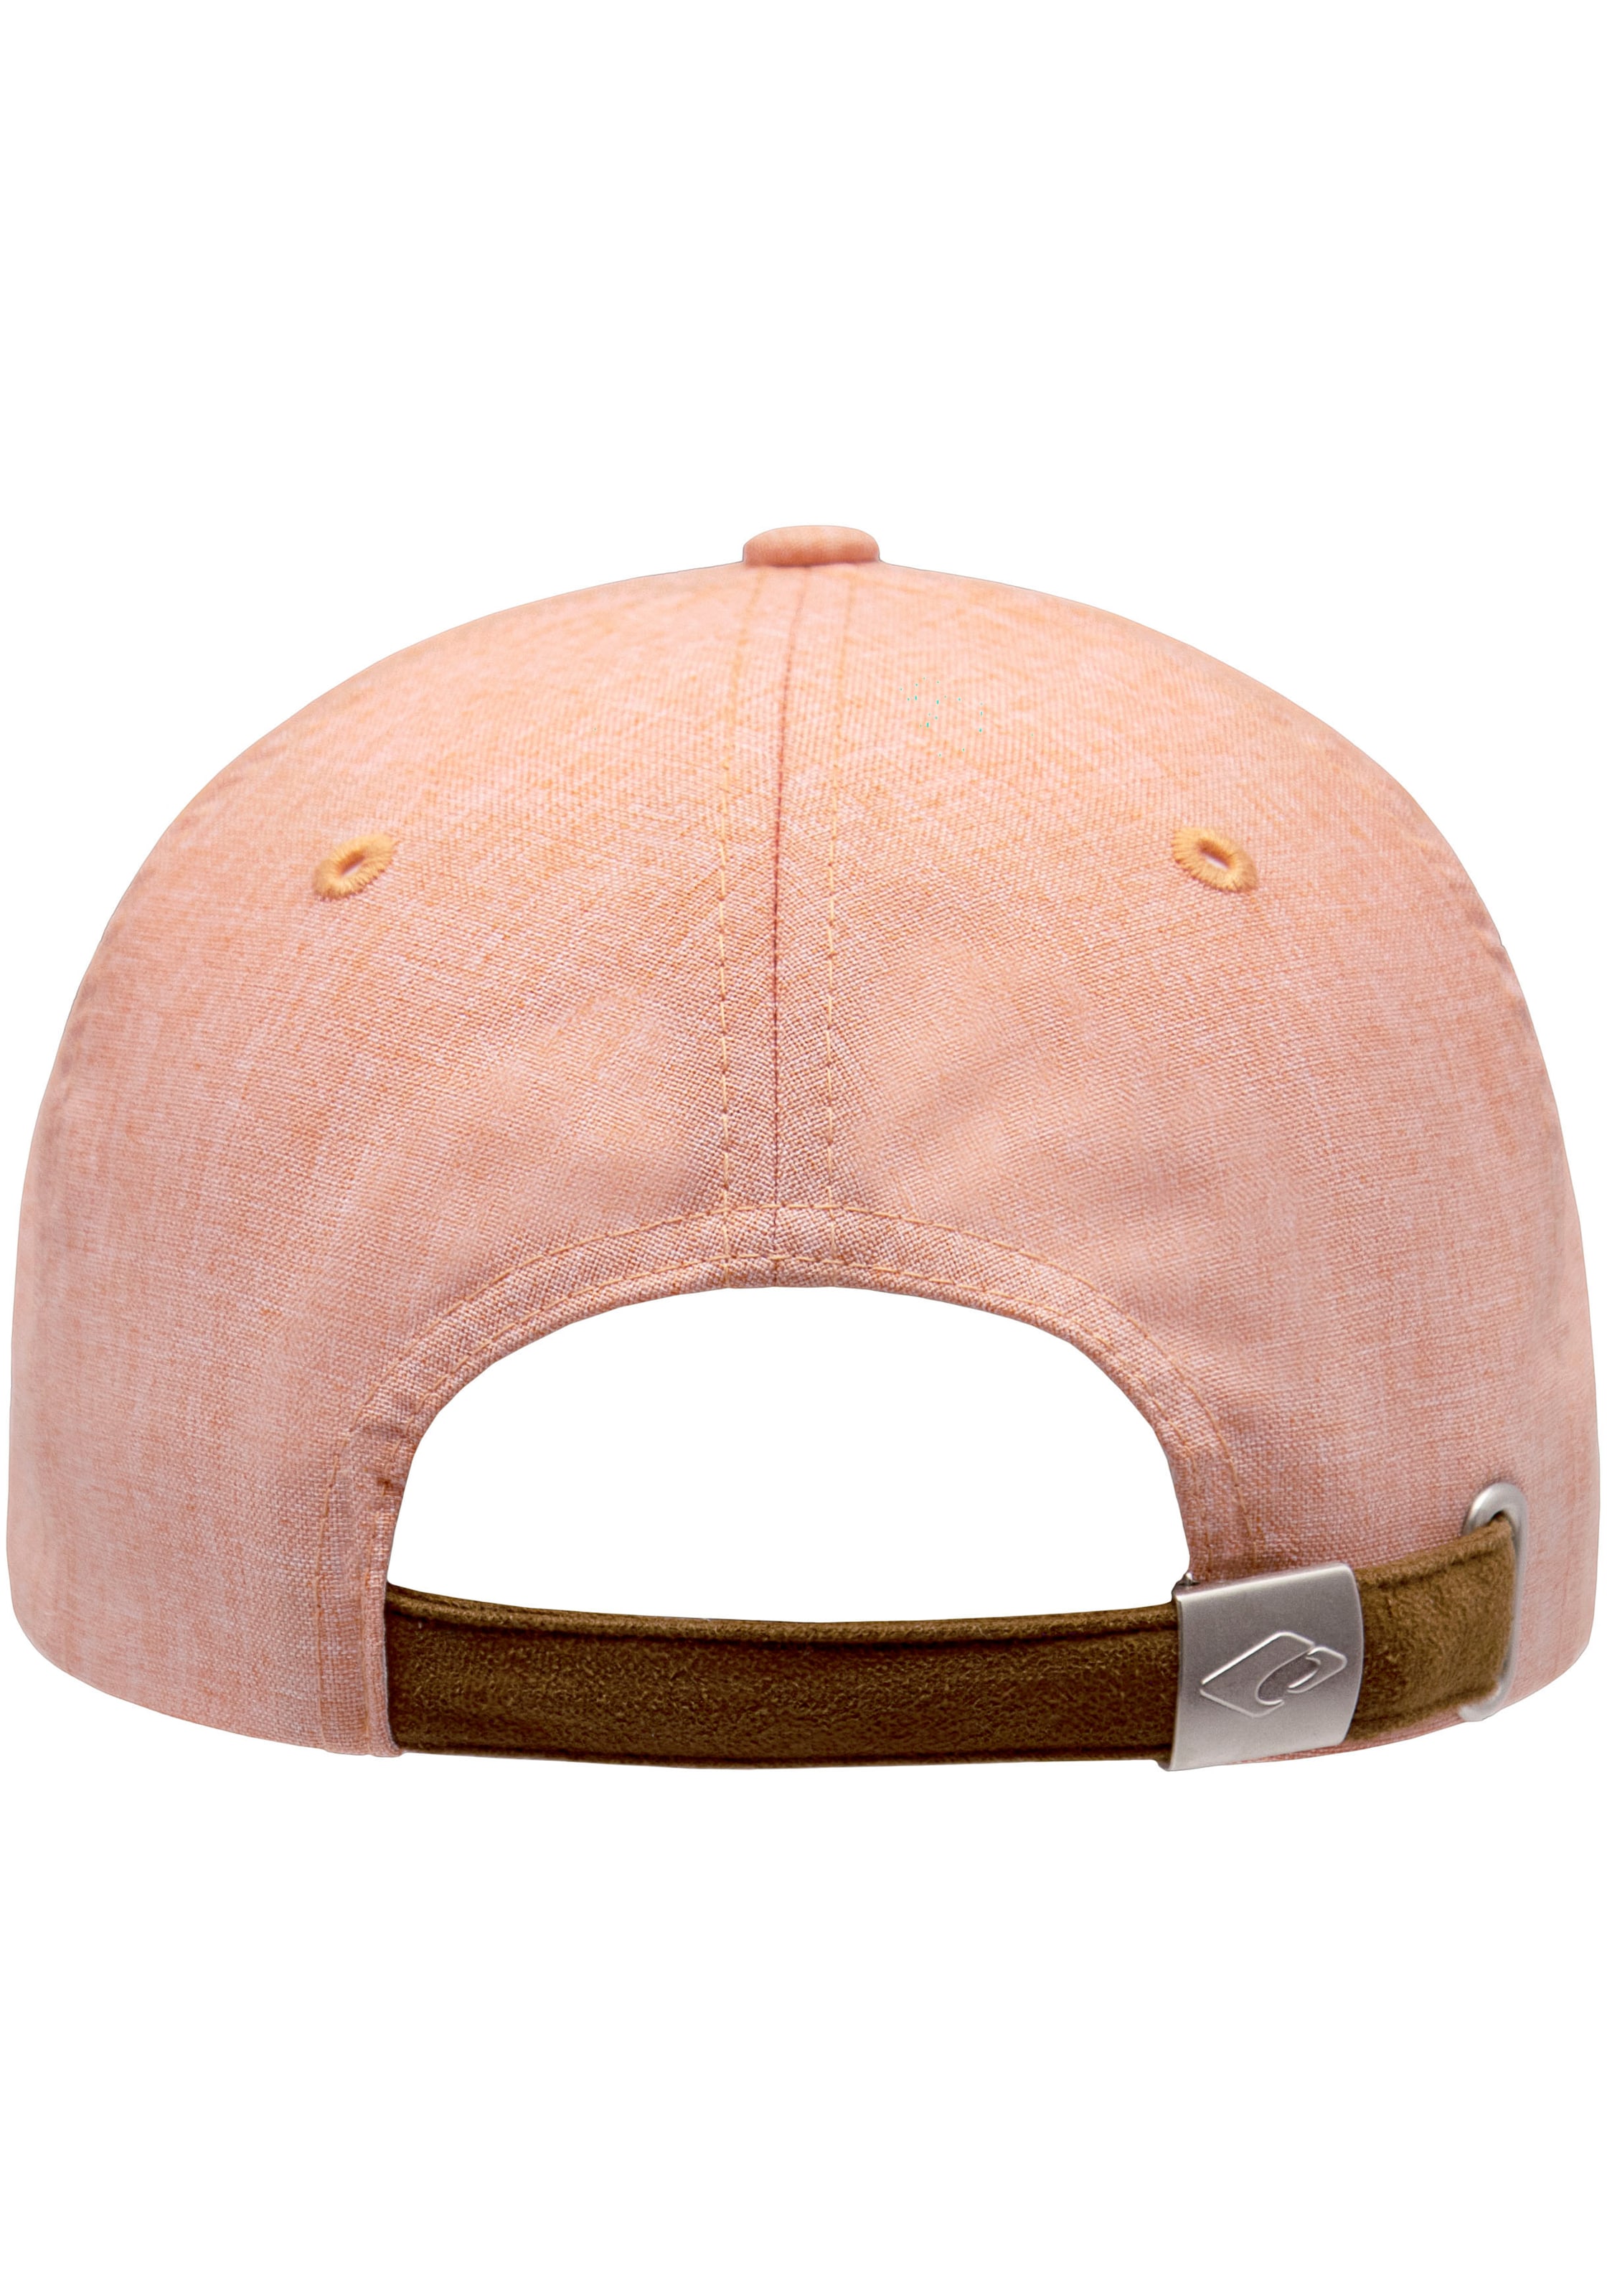 chillouts Baseball Cap, Amadora Hat in melierter Optik bei | Baseball Caps